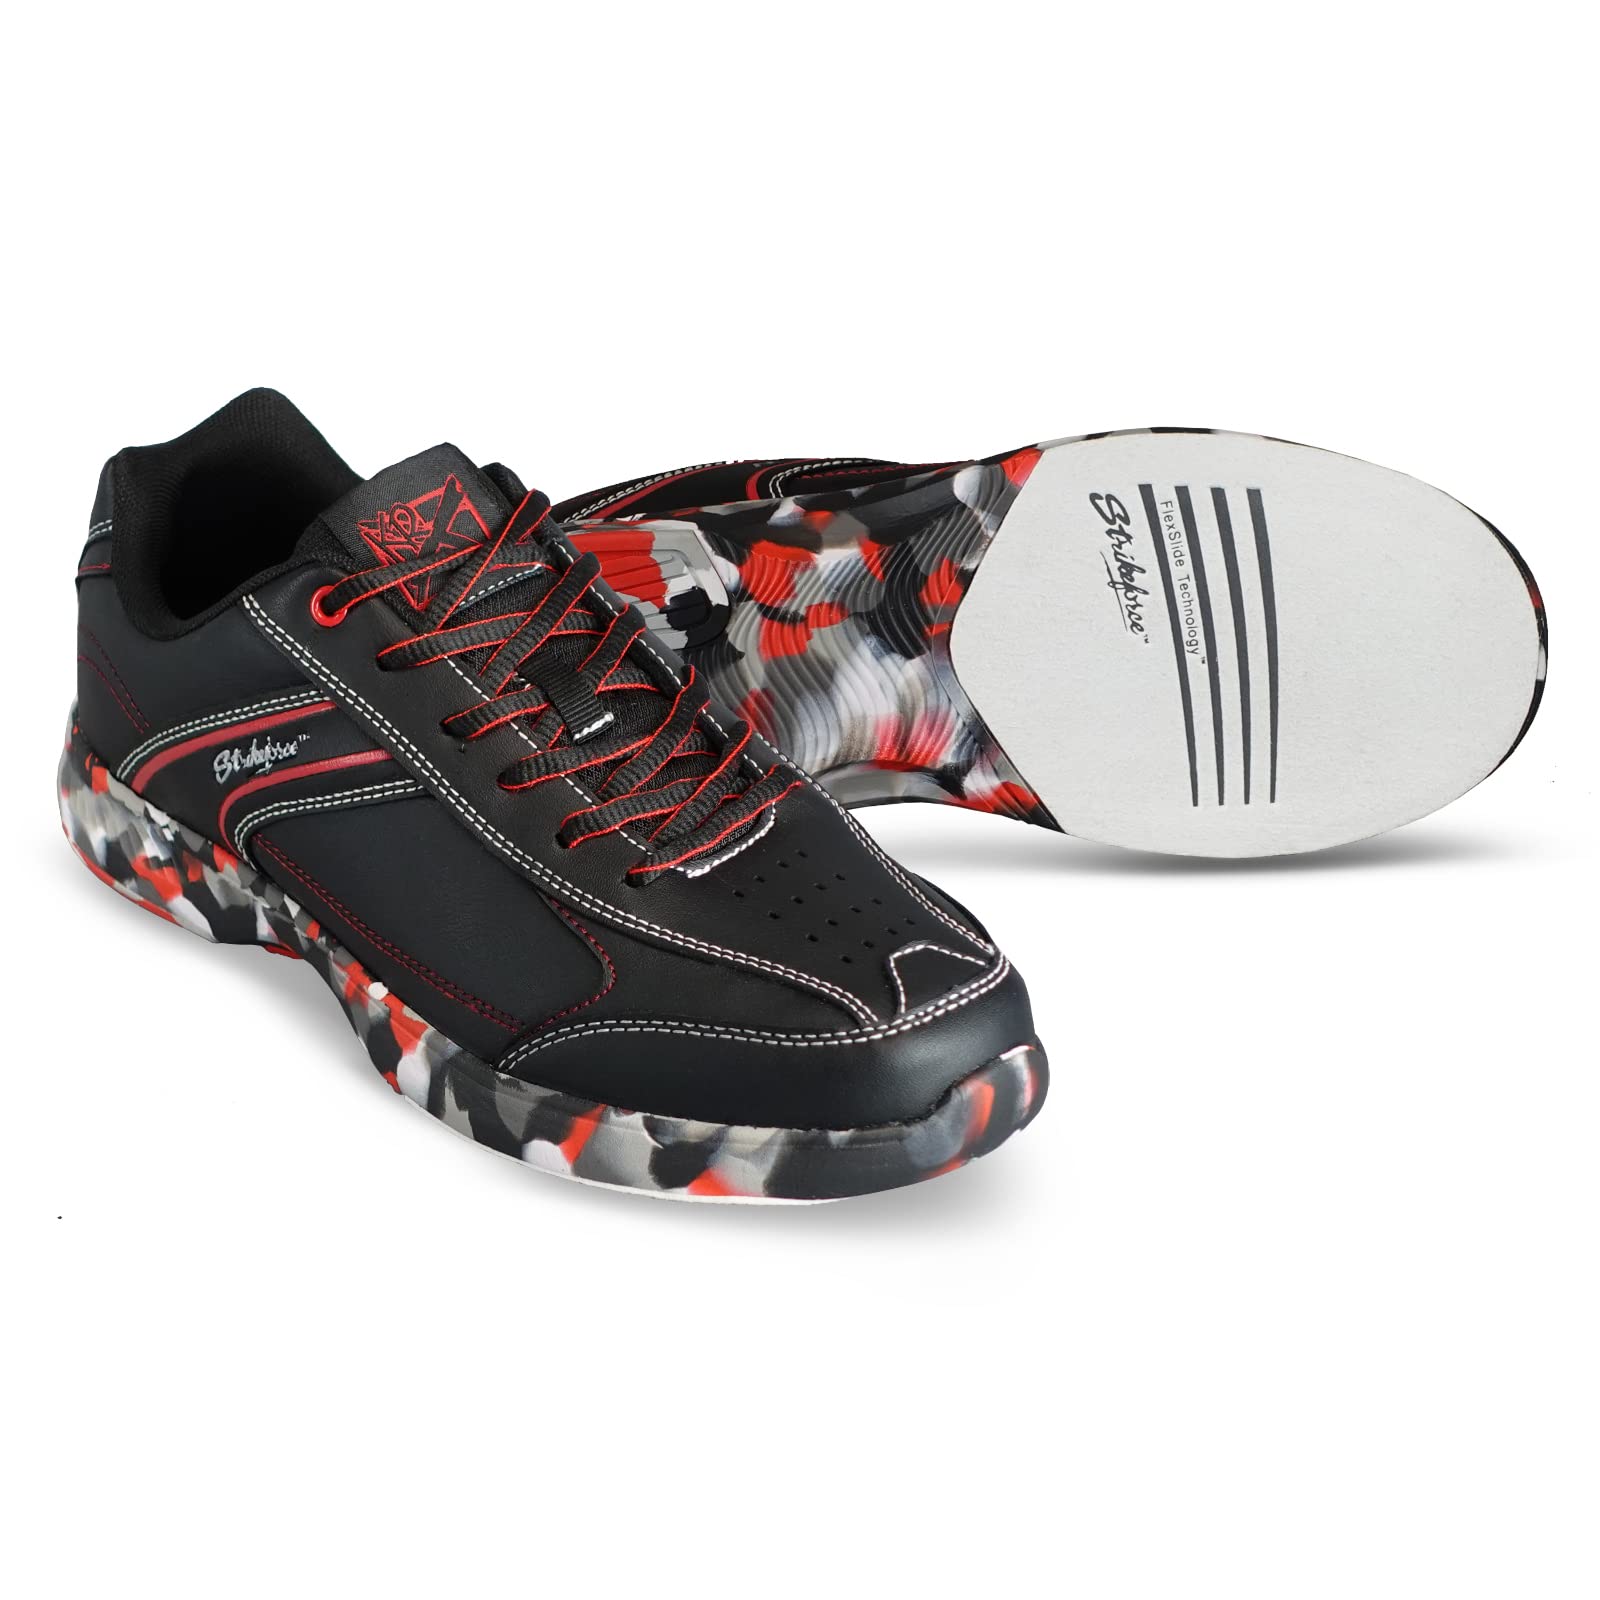 KR Strikeforce Aviators Men's Athletic Bowling Shoe